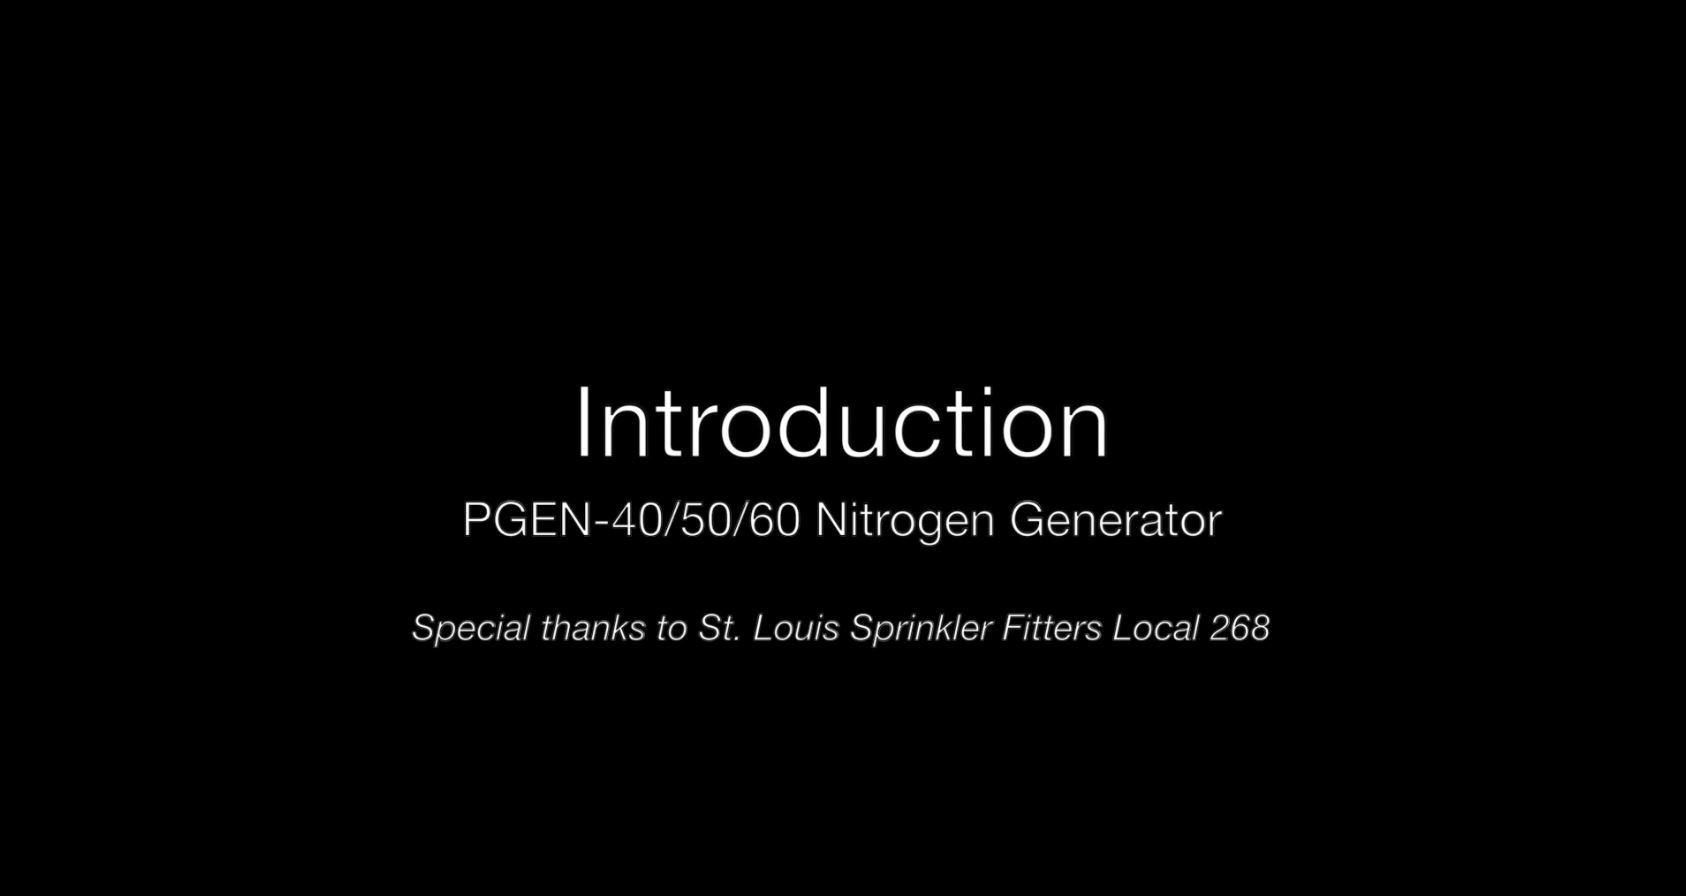 PGEN-40 Nitrogen Generator and Fire Sprinkler Corrosion